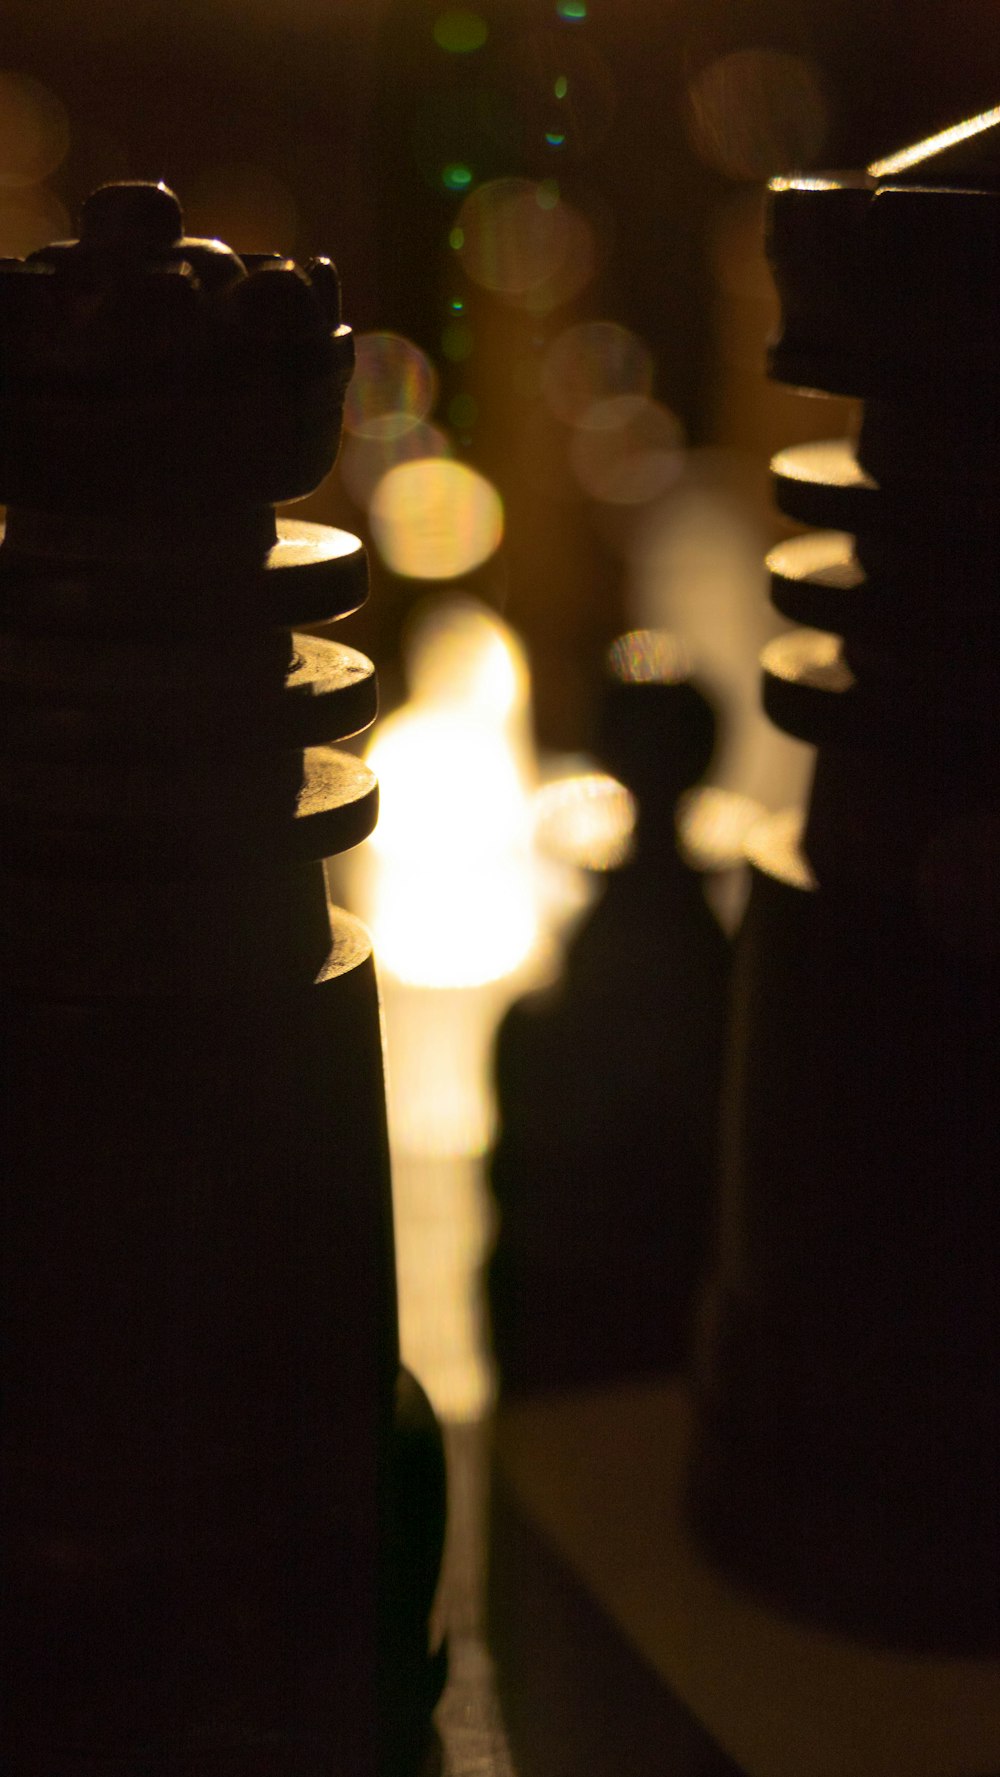 a close-up of a light